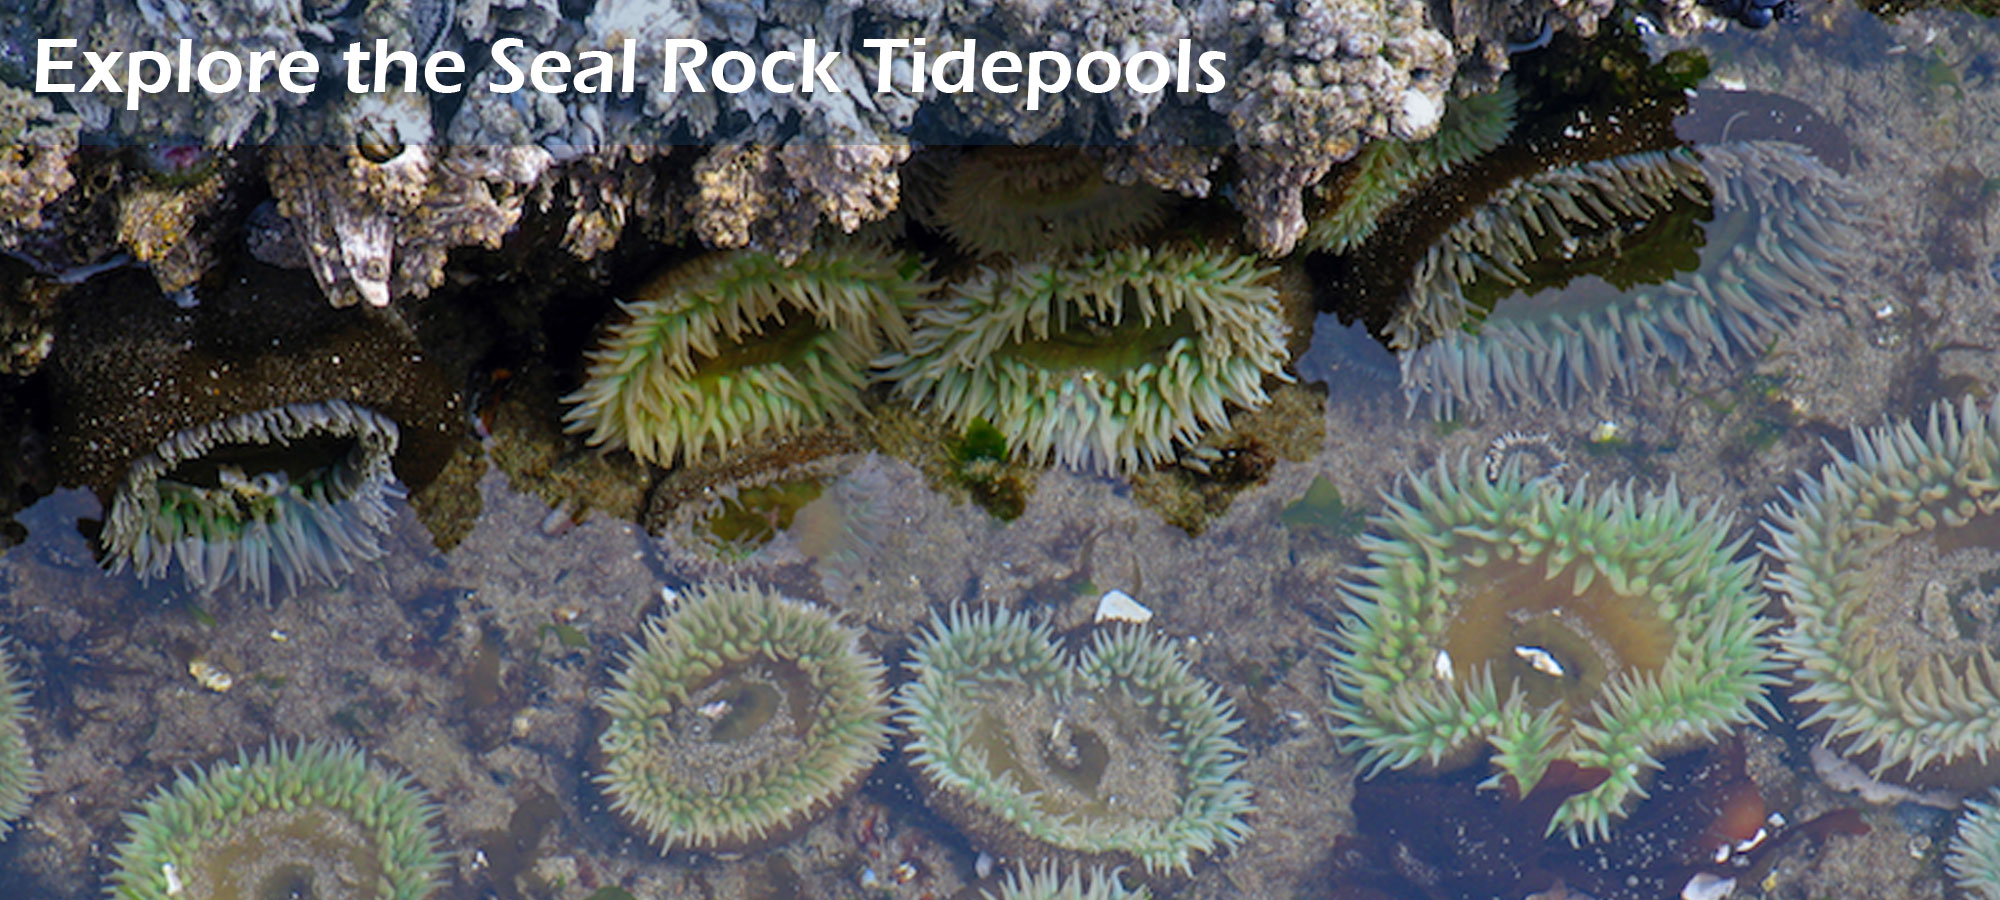 Explore the Seal Rock Tidepools